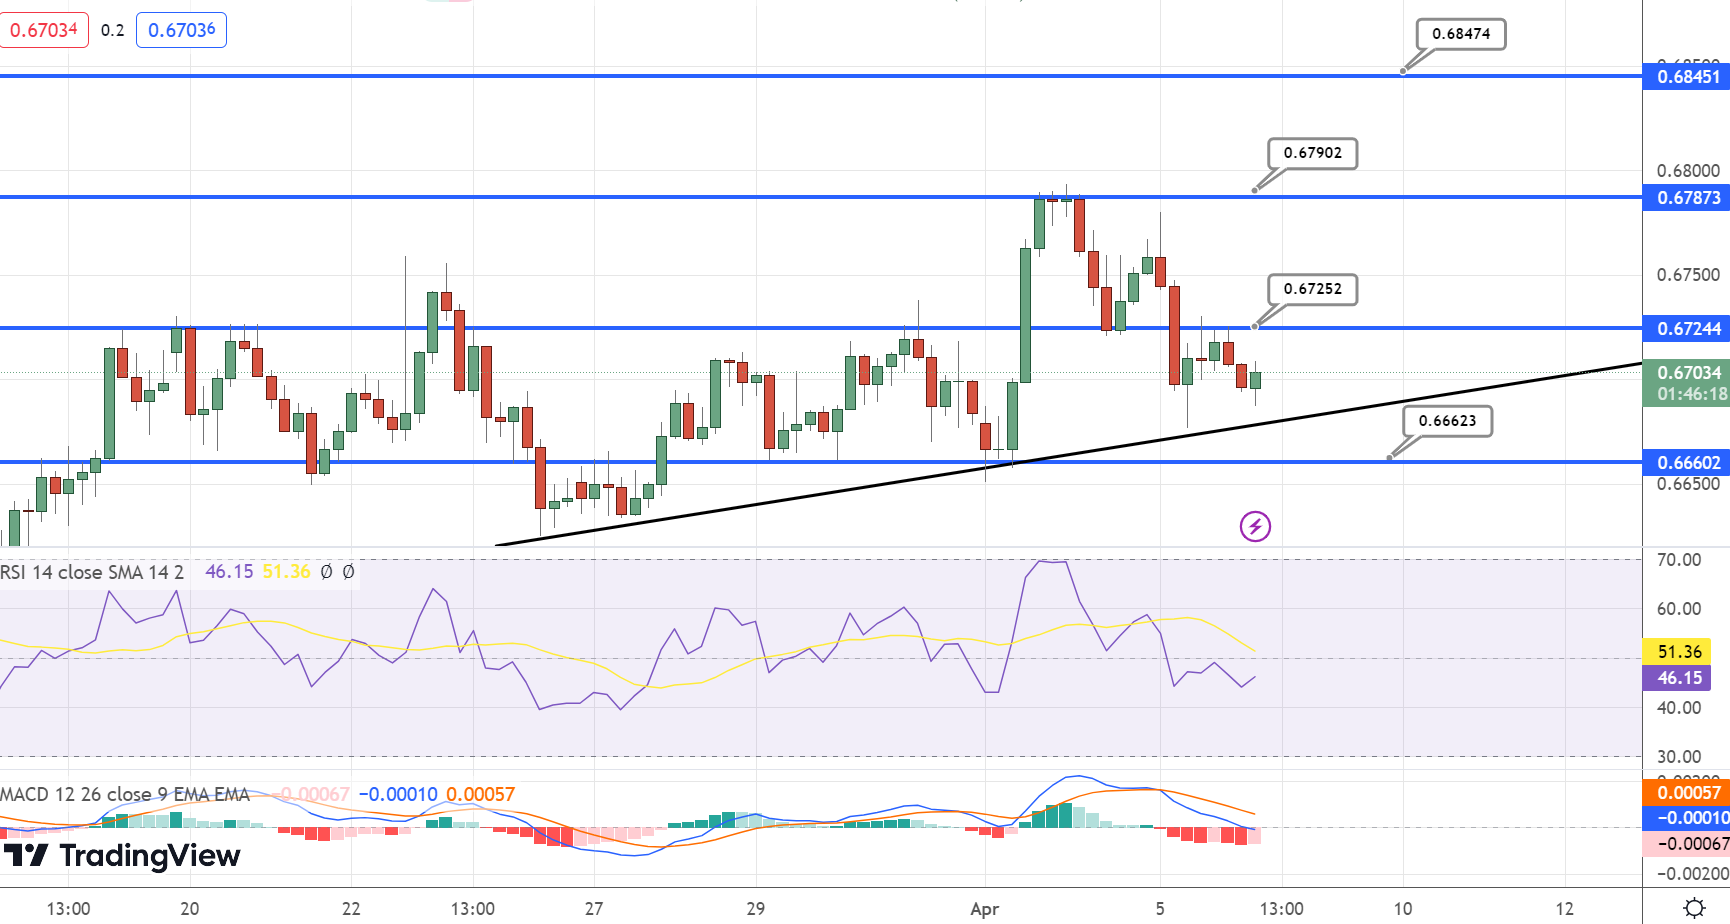  AUD/USD Price Chart - Source: Tradingview